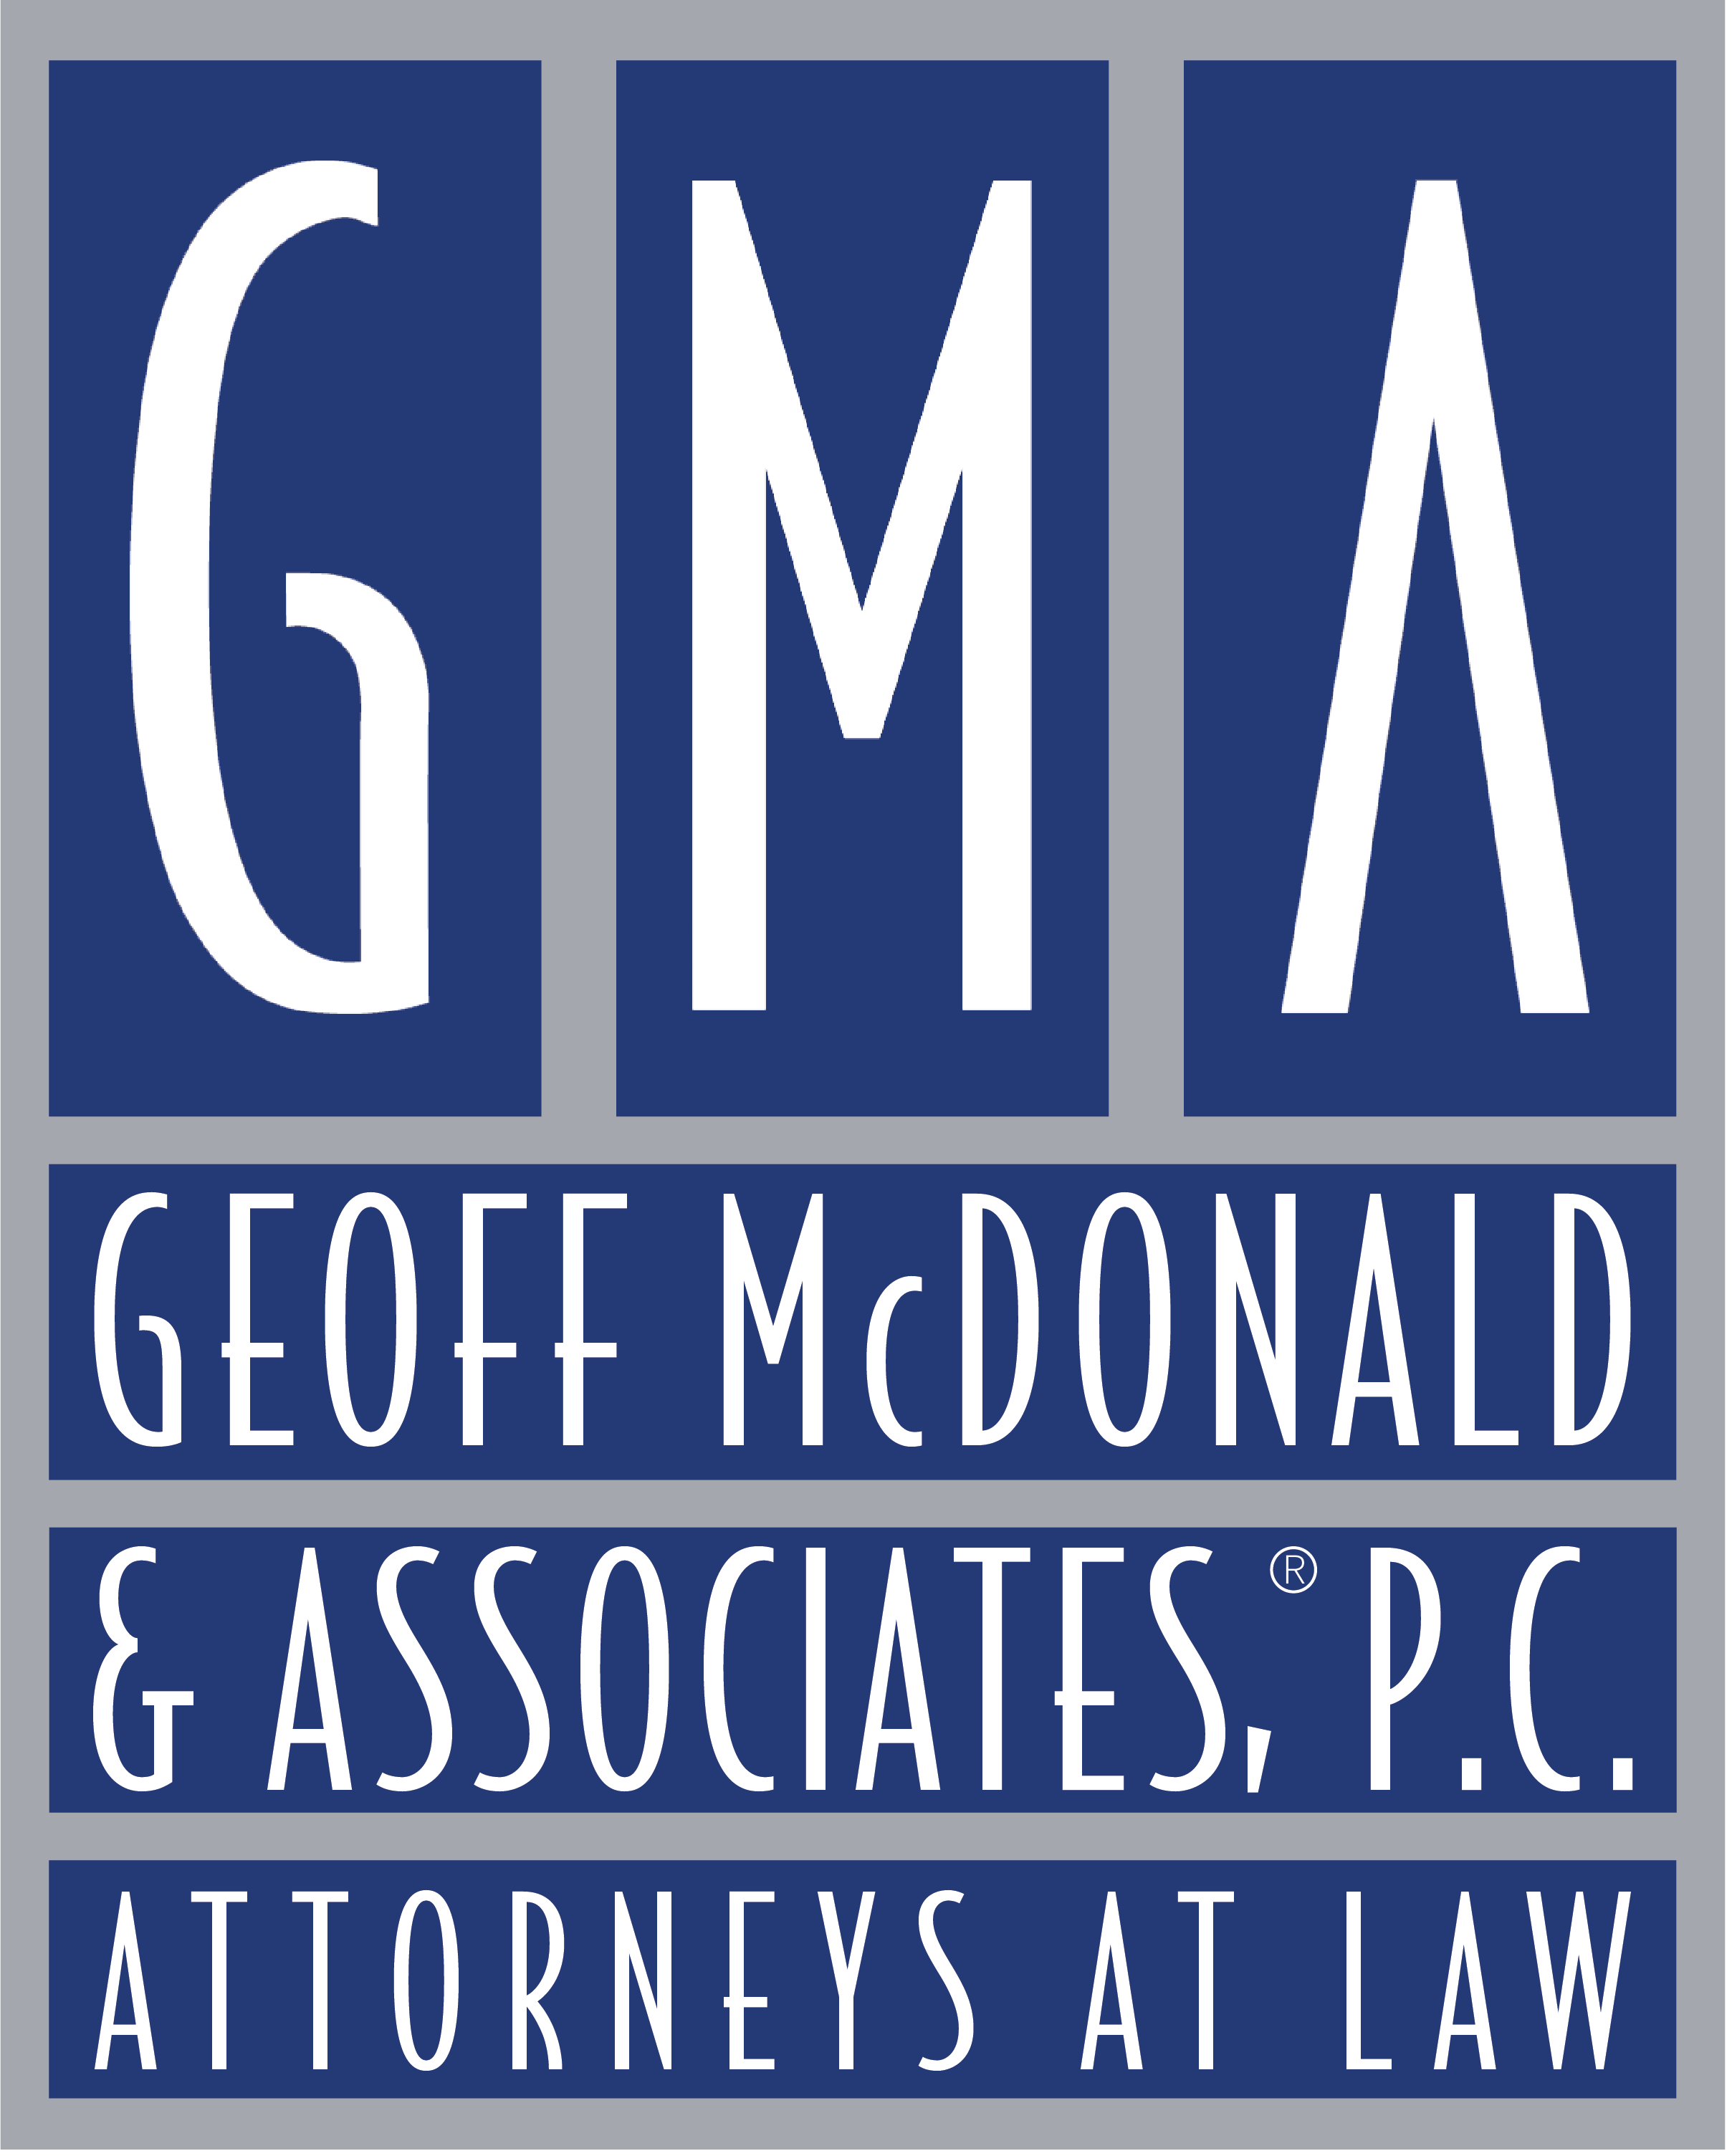 Geoff McDonald and Associates, P.C. logo